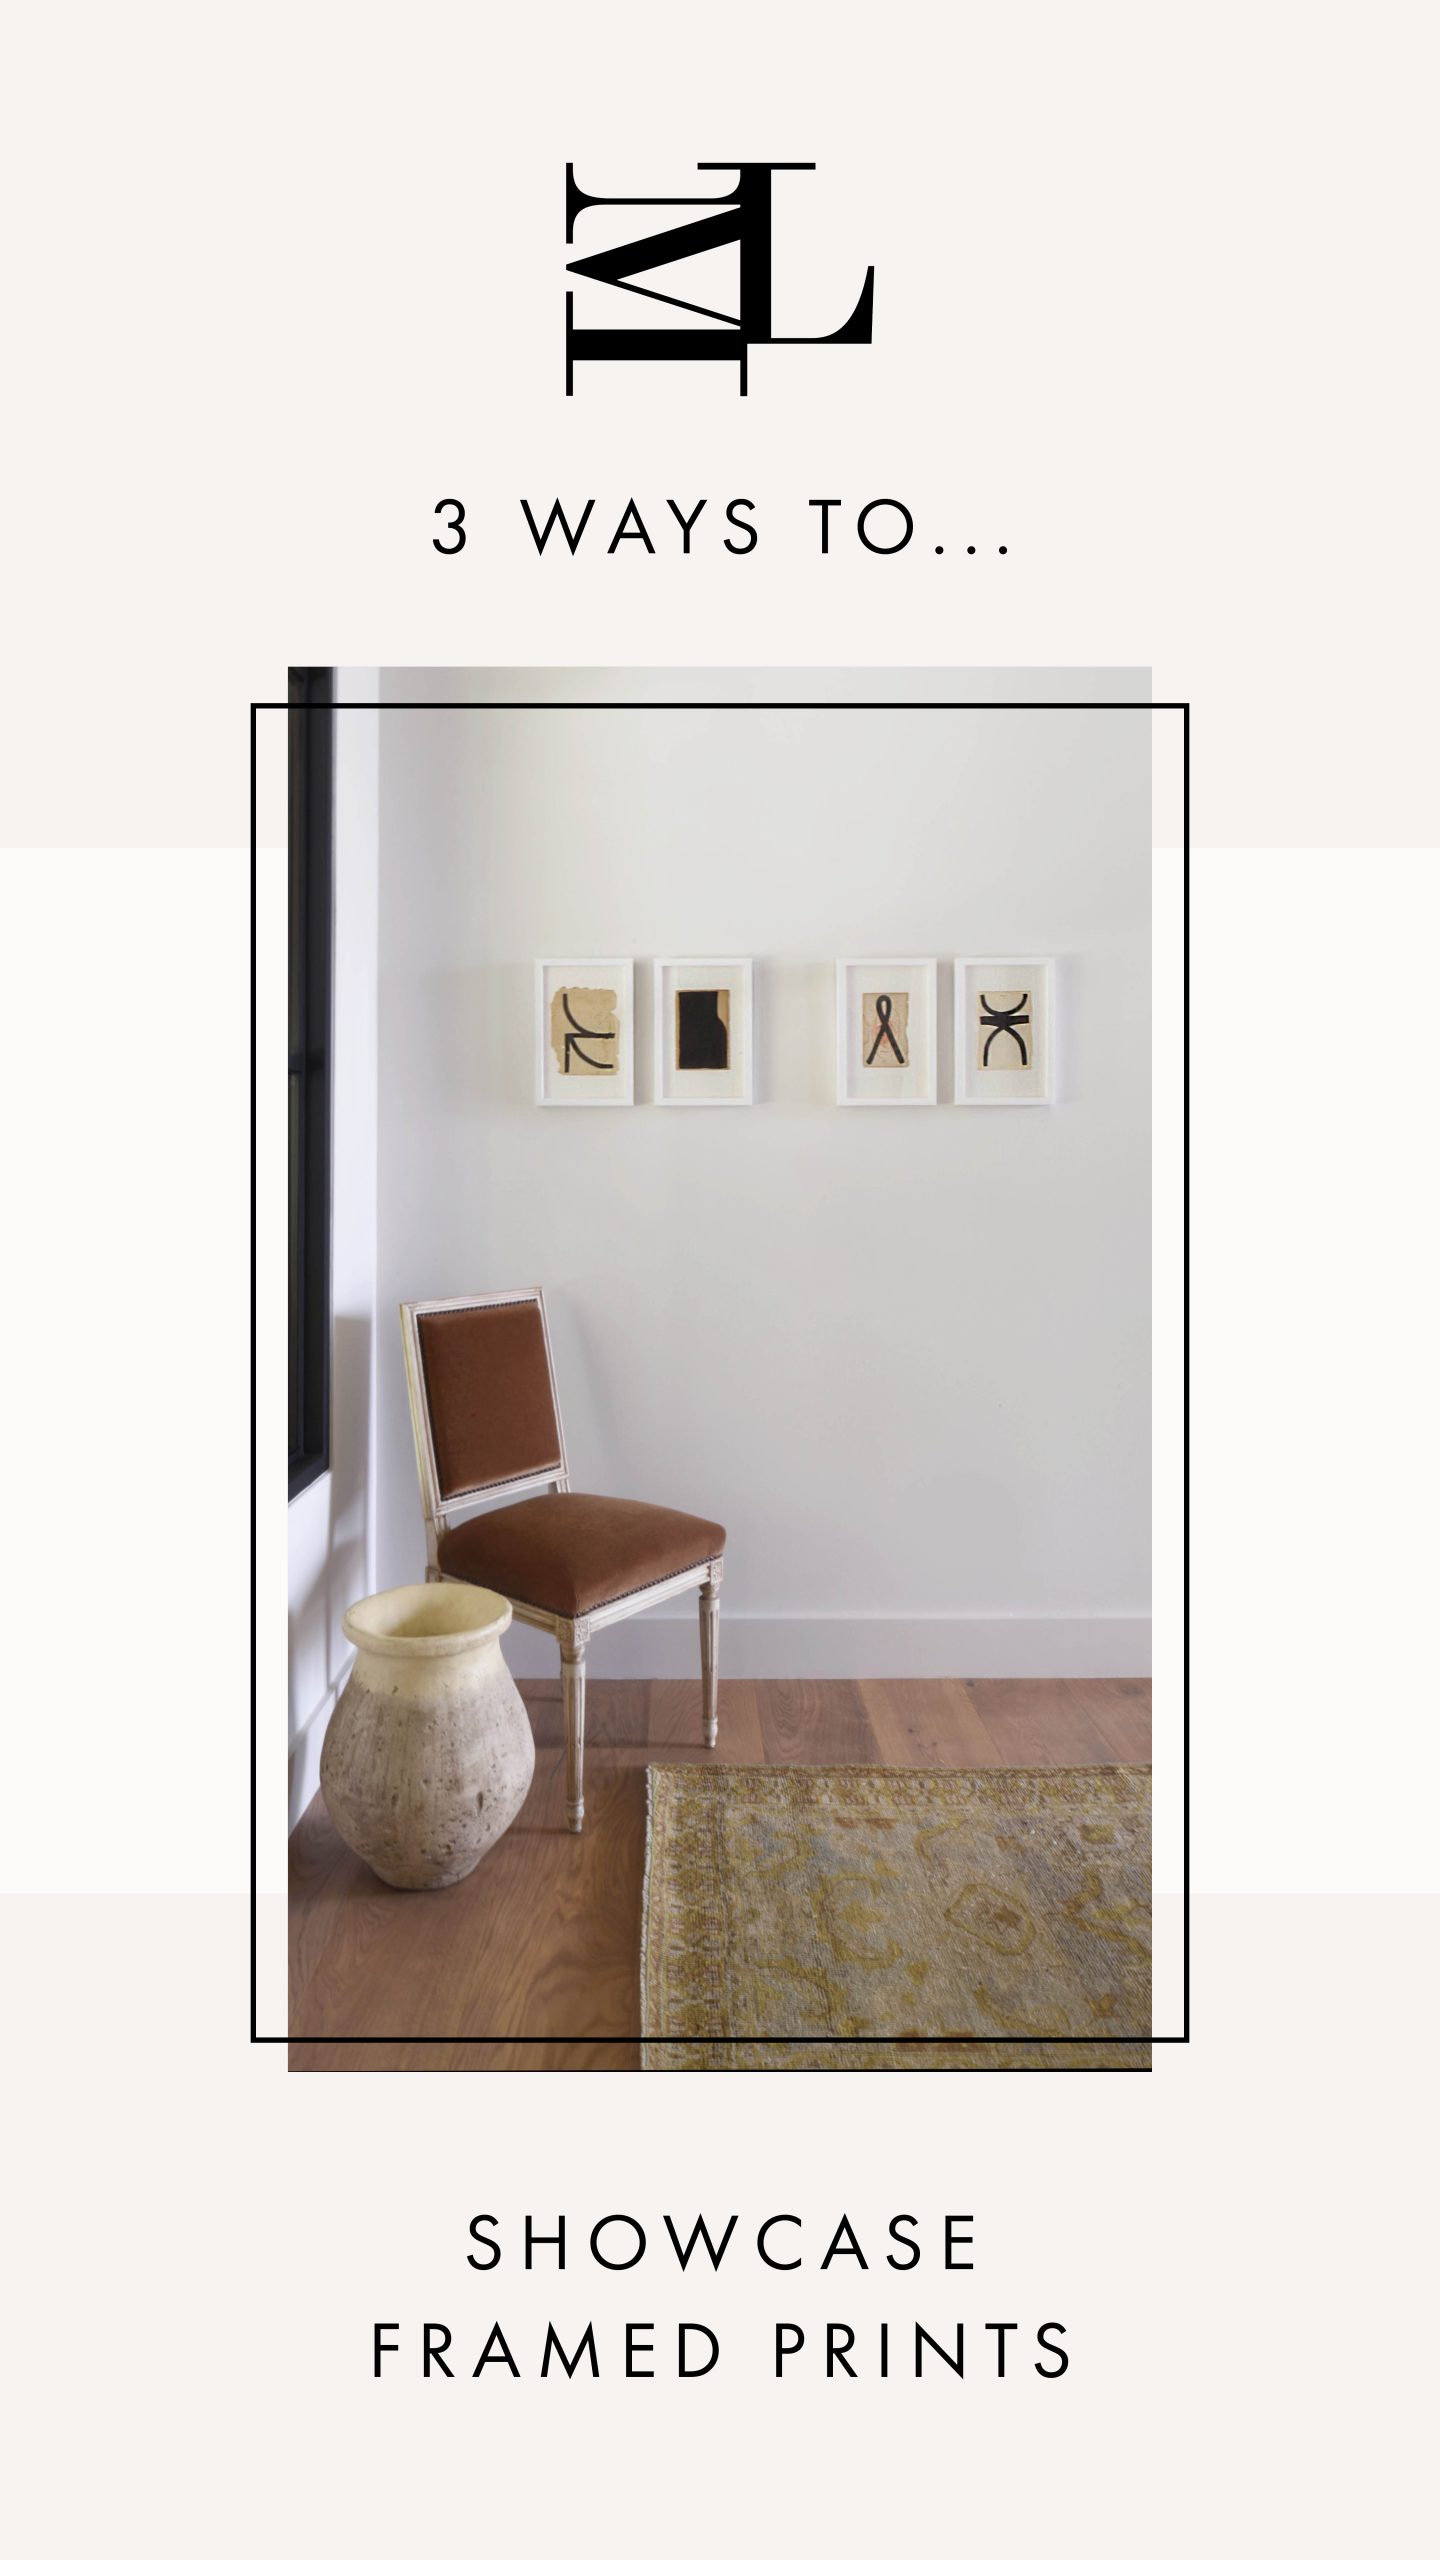 3 Ways To: Showcase framed prints